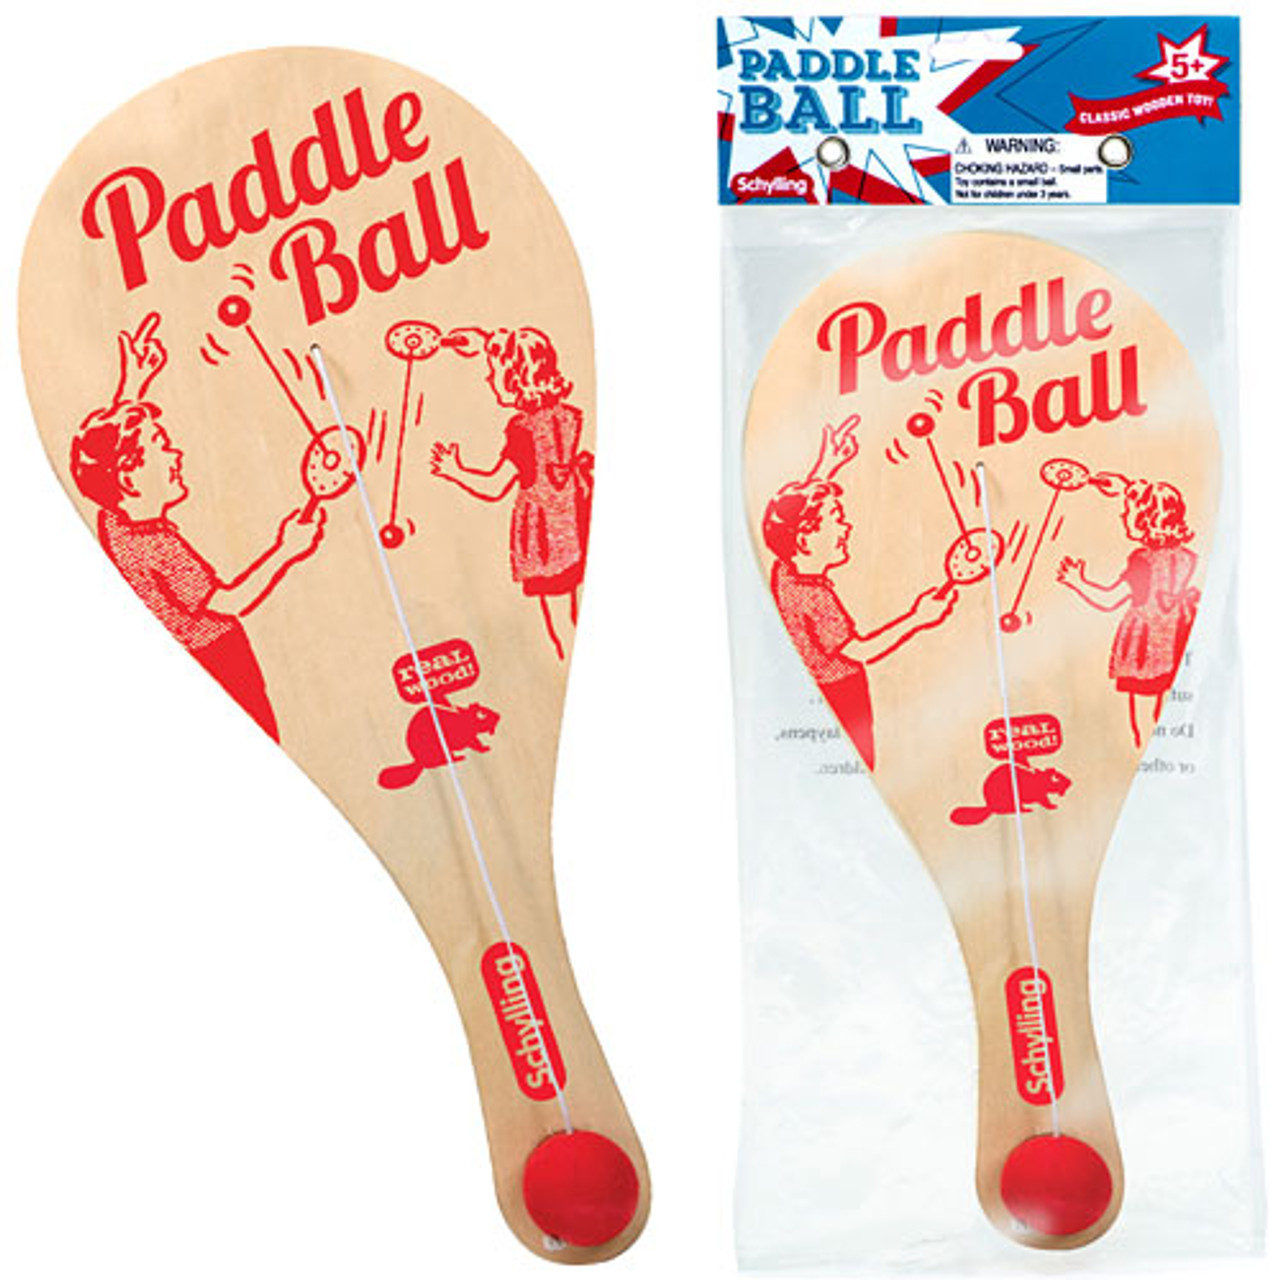 Paddle Ball Game 1